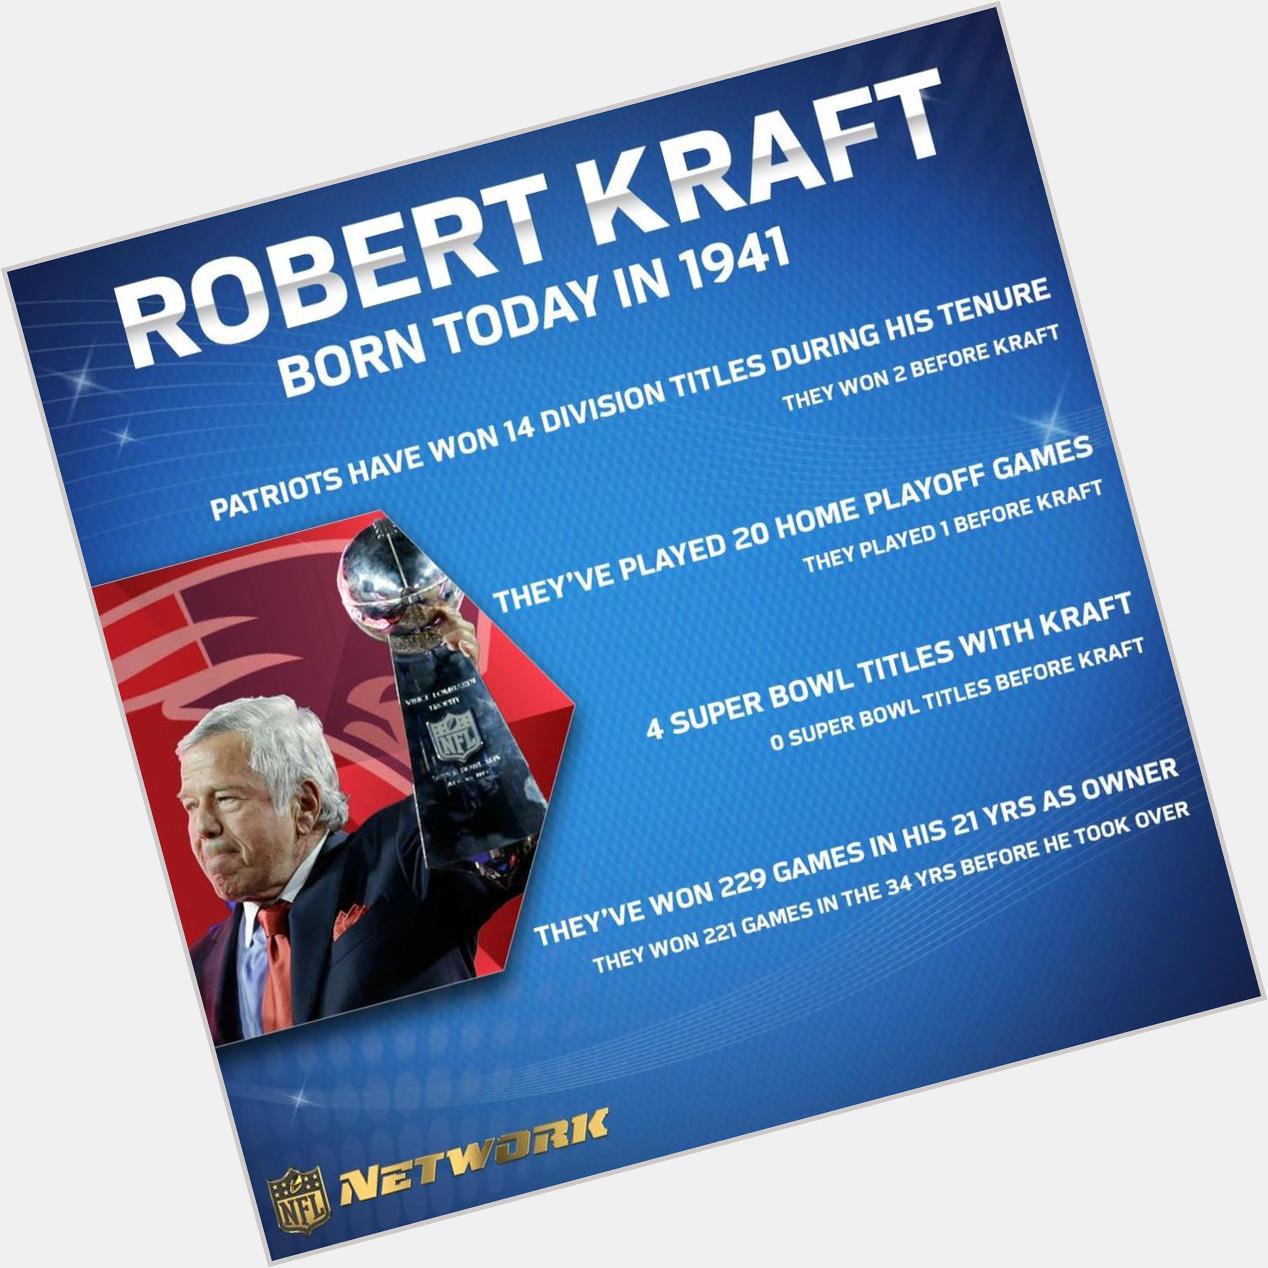 HAPPY TIME PEOPLE!

Happy birthday Robert Kraft!      